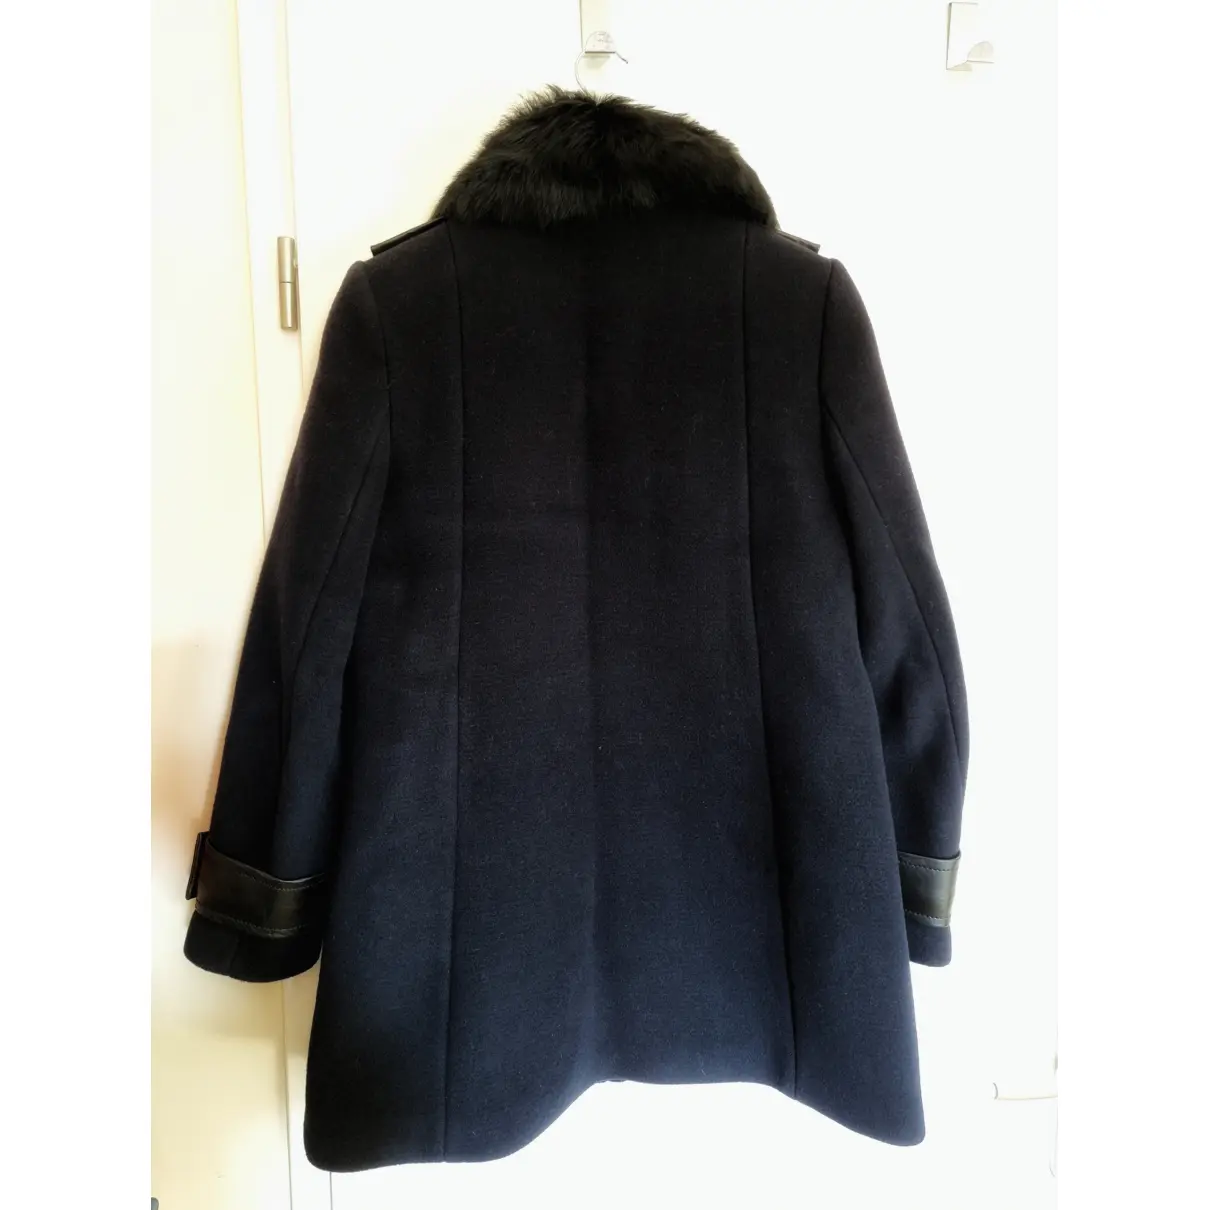 Buy Claudie Pierlot Fall Winter 2019 wool coat online